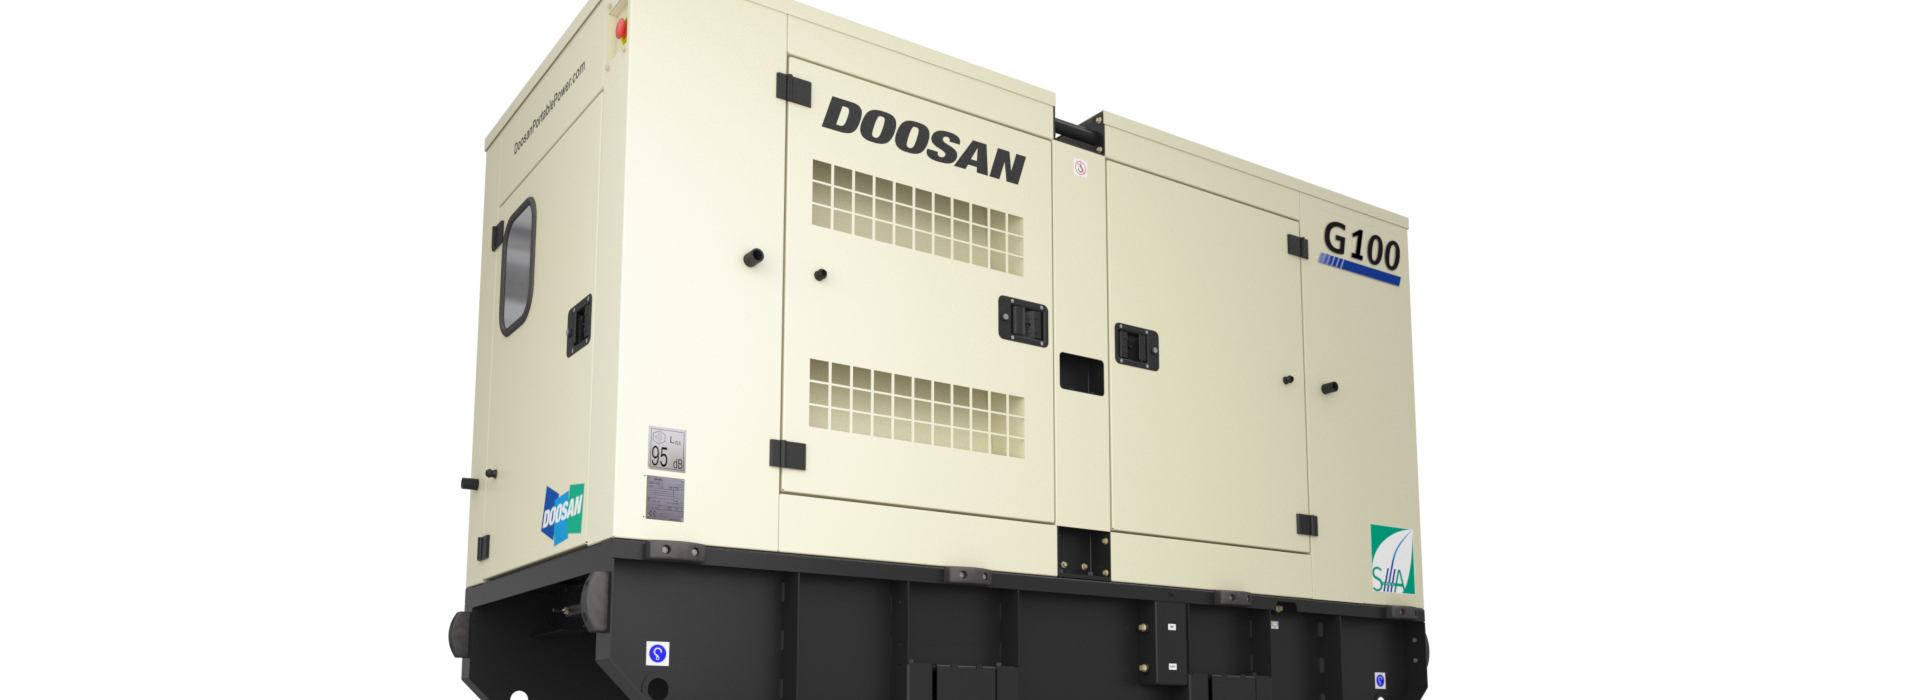 Doosan Portable Power: G100